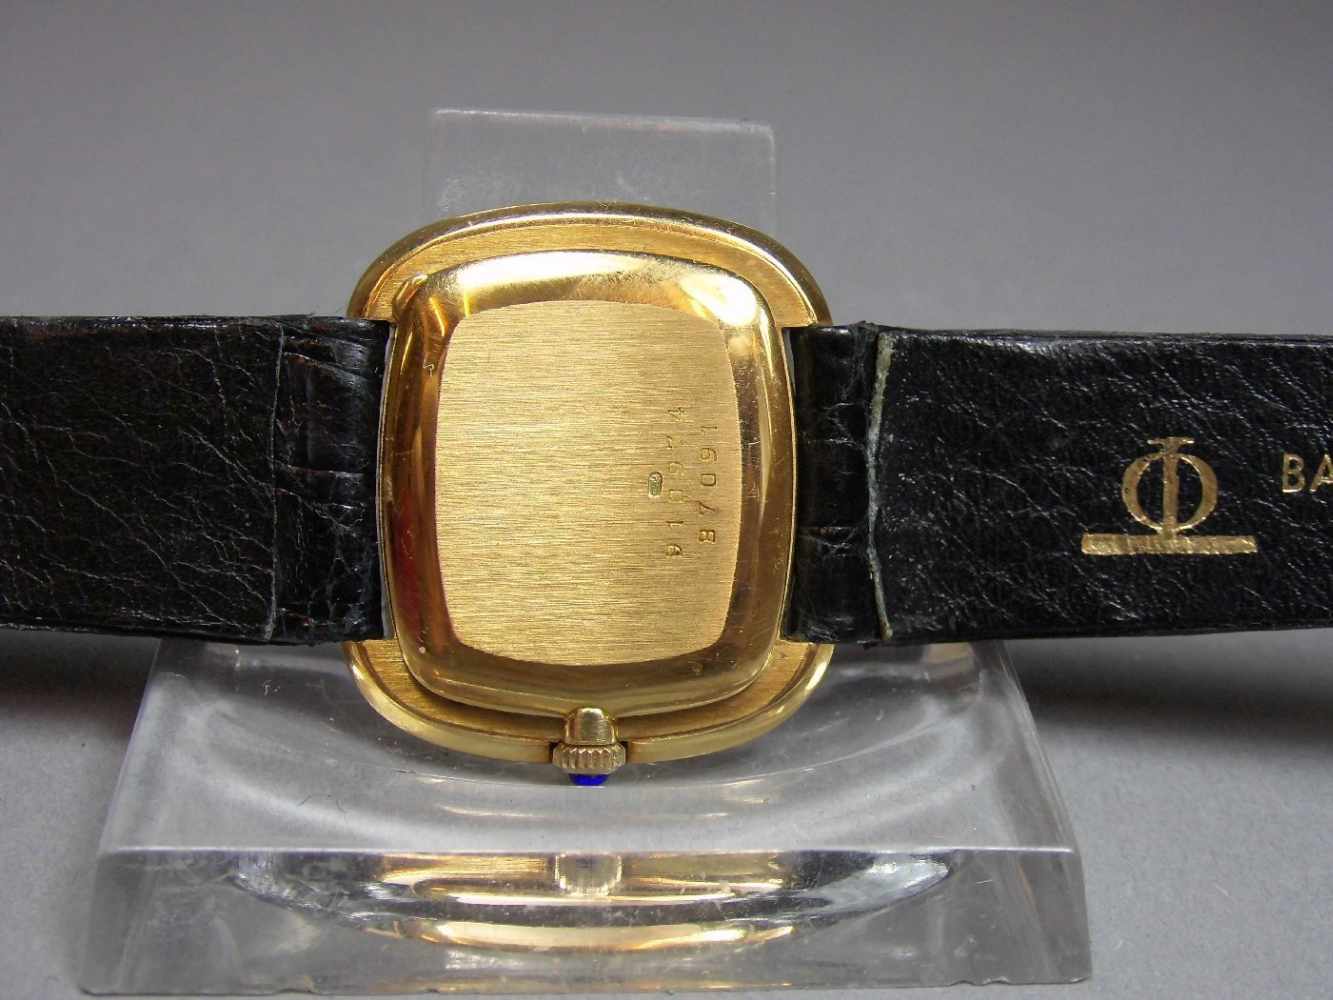 VINTAGE GOLD-ARMBANDUHR - BAUME & MERCIER GENEVE / wristwatch, 1980er Jahre, Handaufzug, - Image 6 of 7